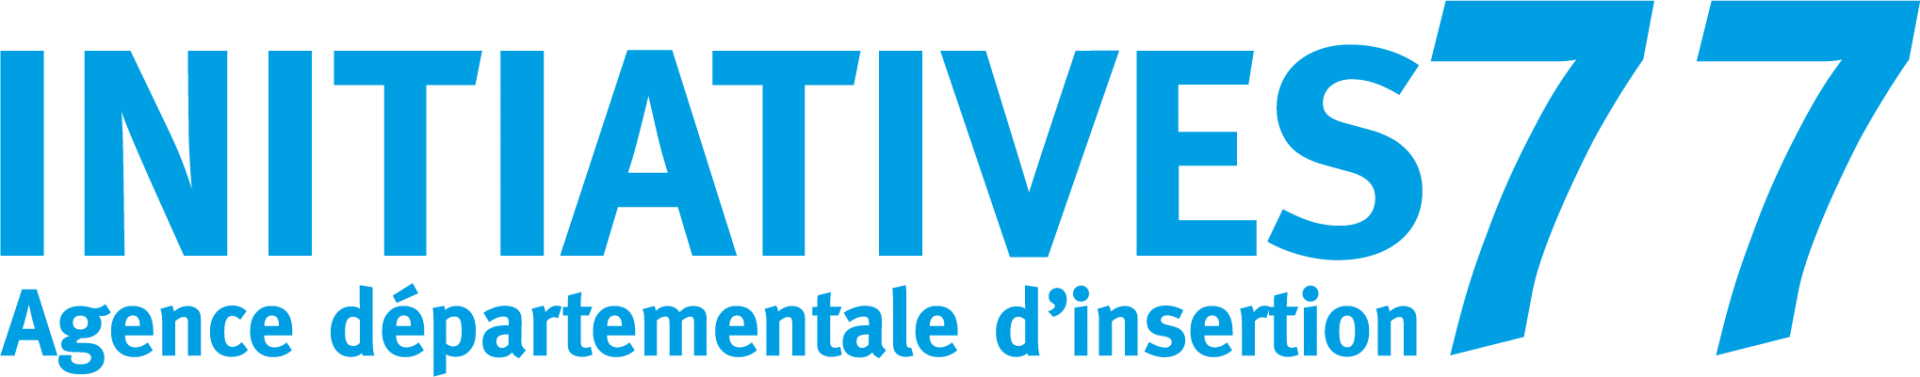 Logo initiatives77